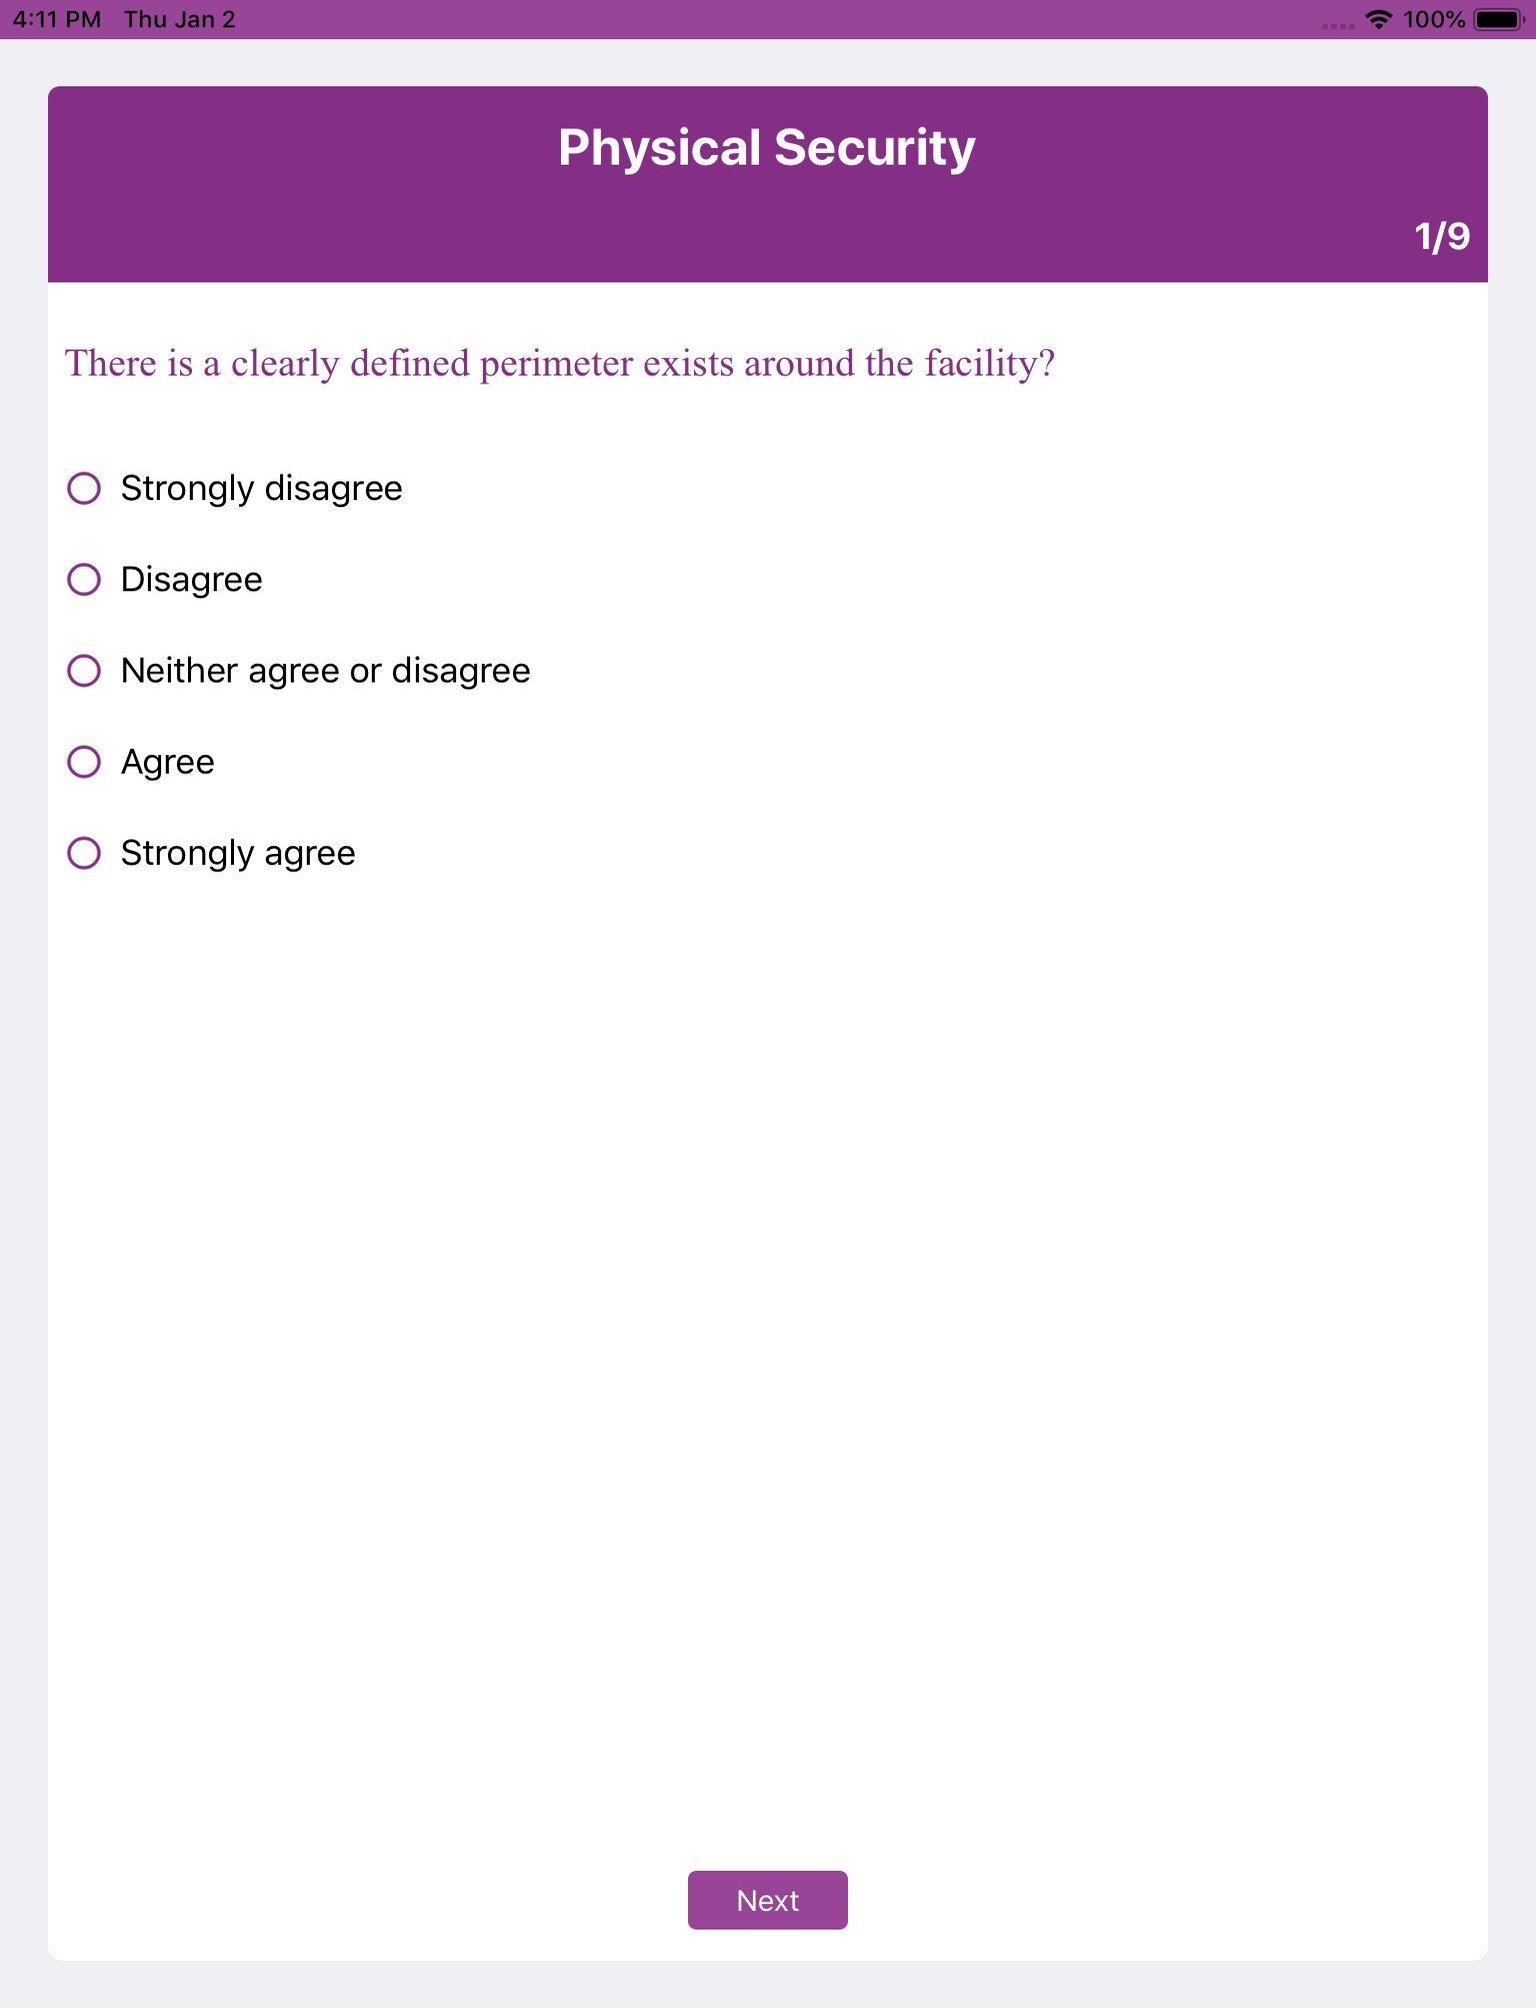 Biosecurity_Questionnaire screenshot 4